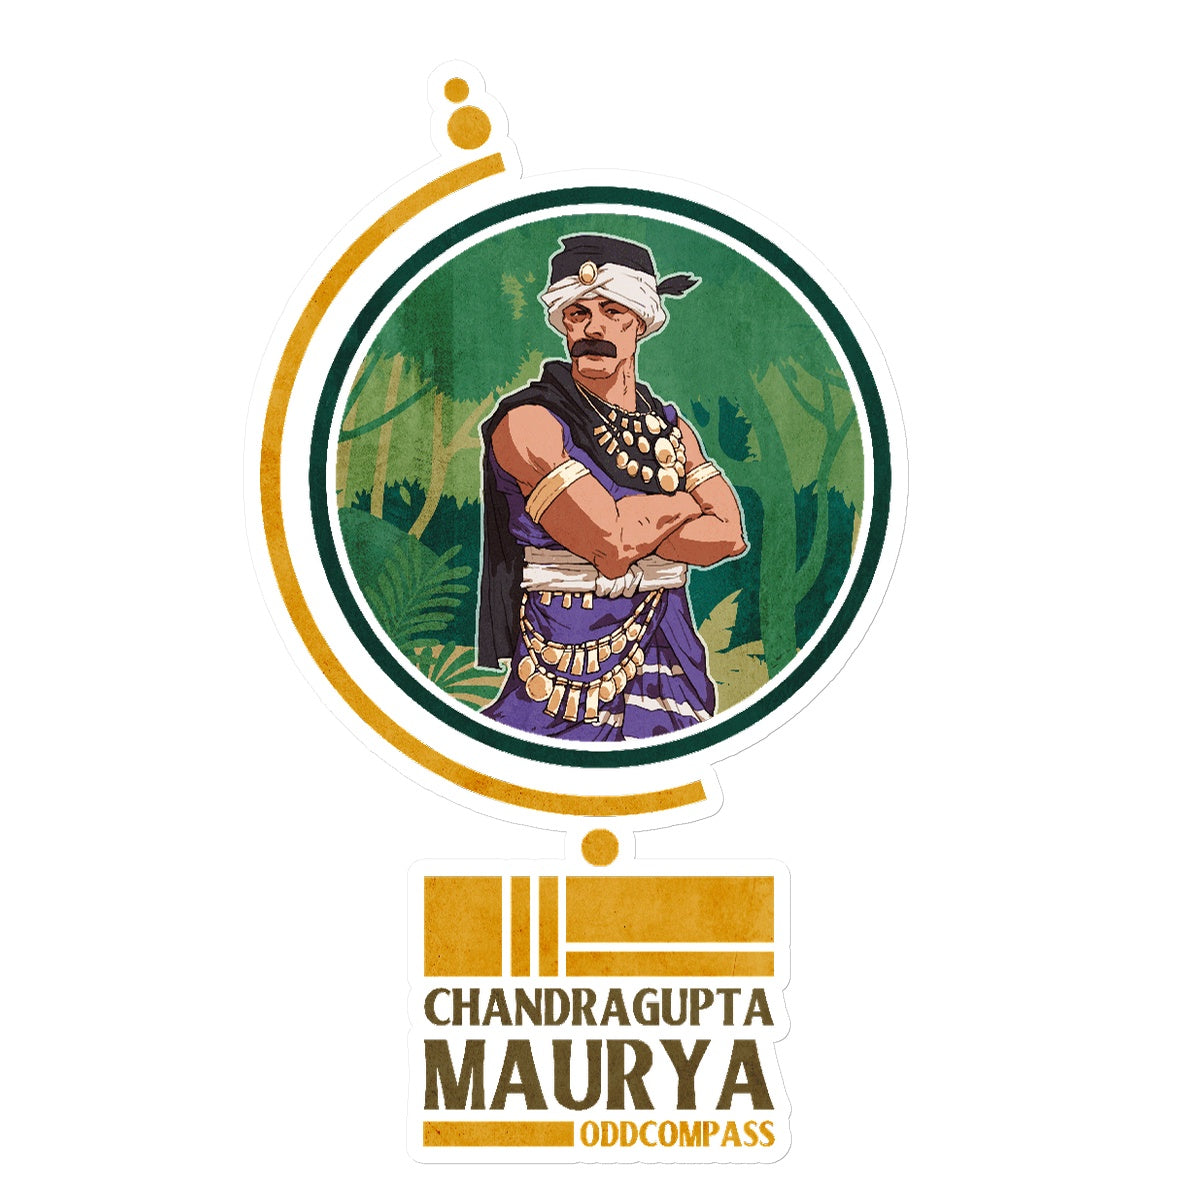 MauryanHigh® School: Where Excellence Resonates through Our Logo